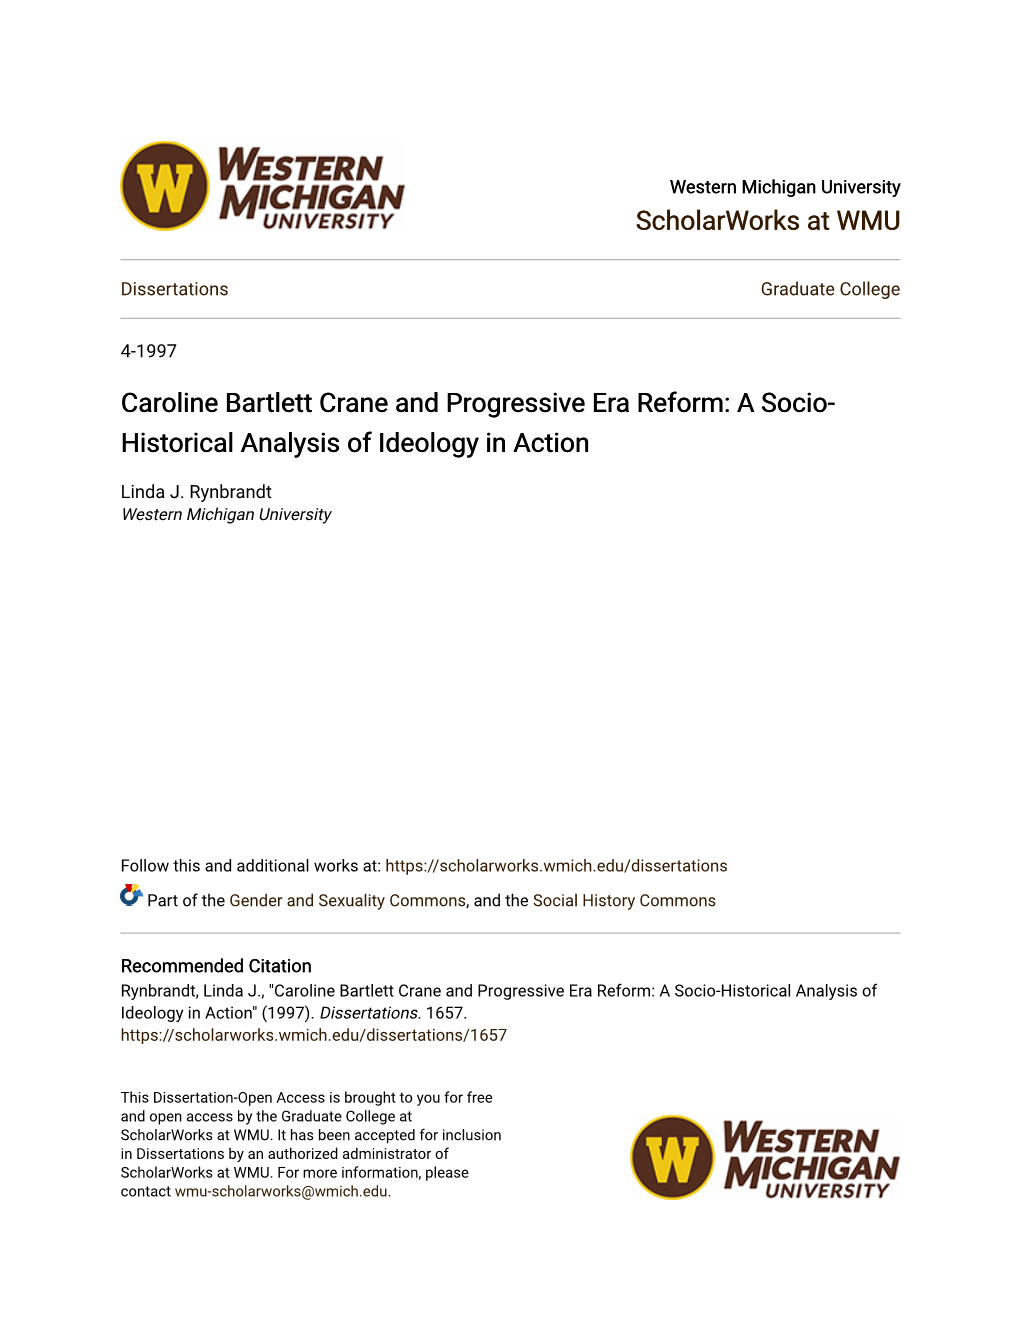 Caroline Bartlett Crane and Progressive Era Reform: a Socio- Historical Analysis of Ideology in Action